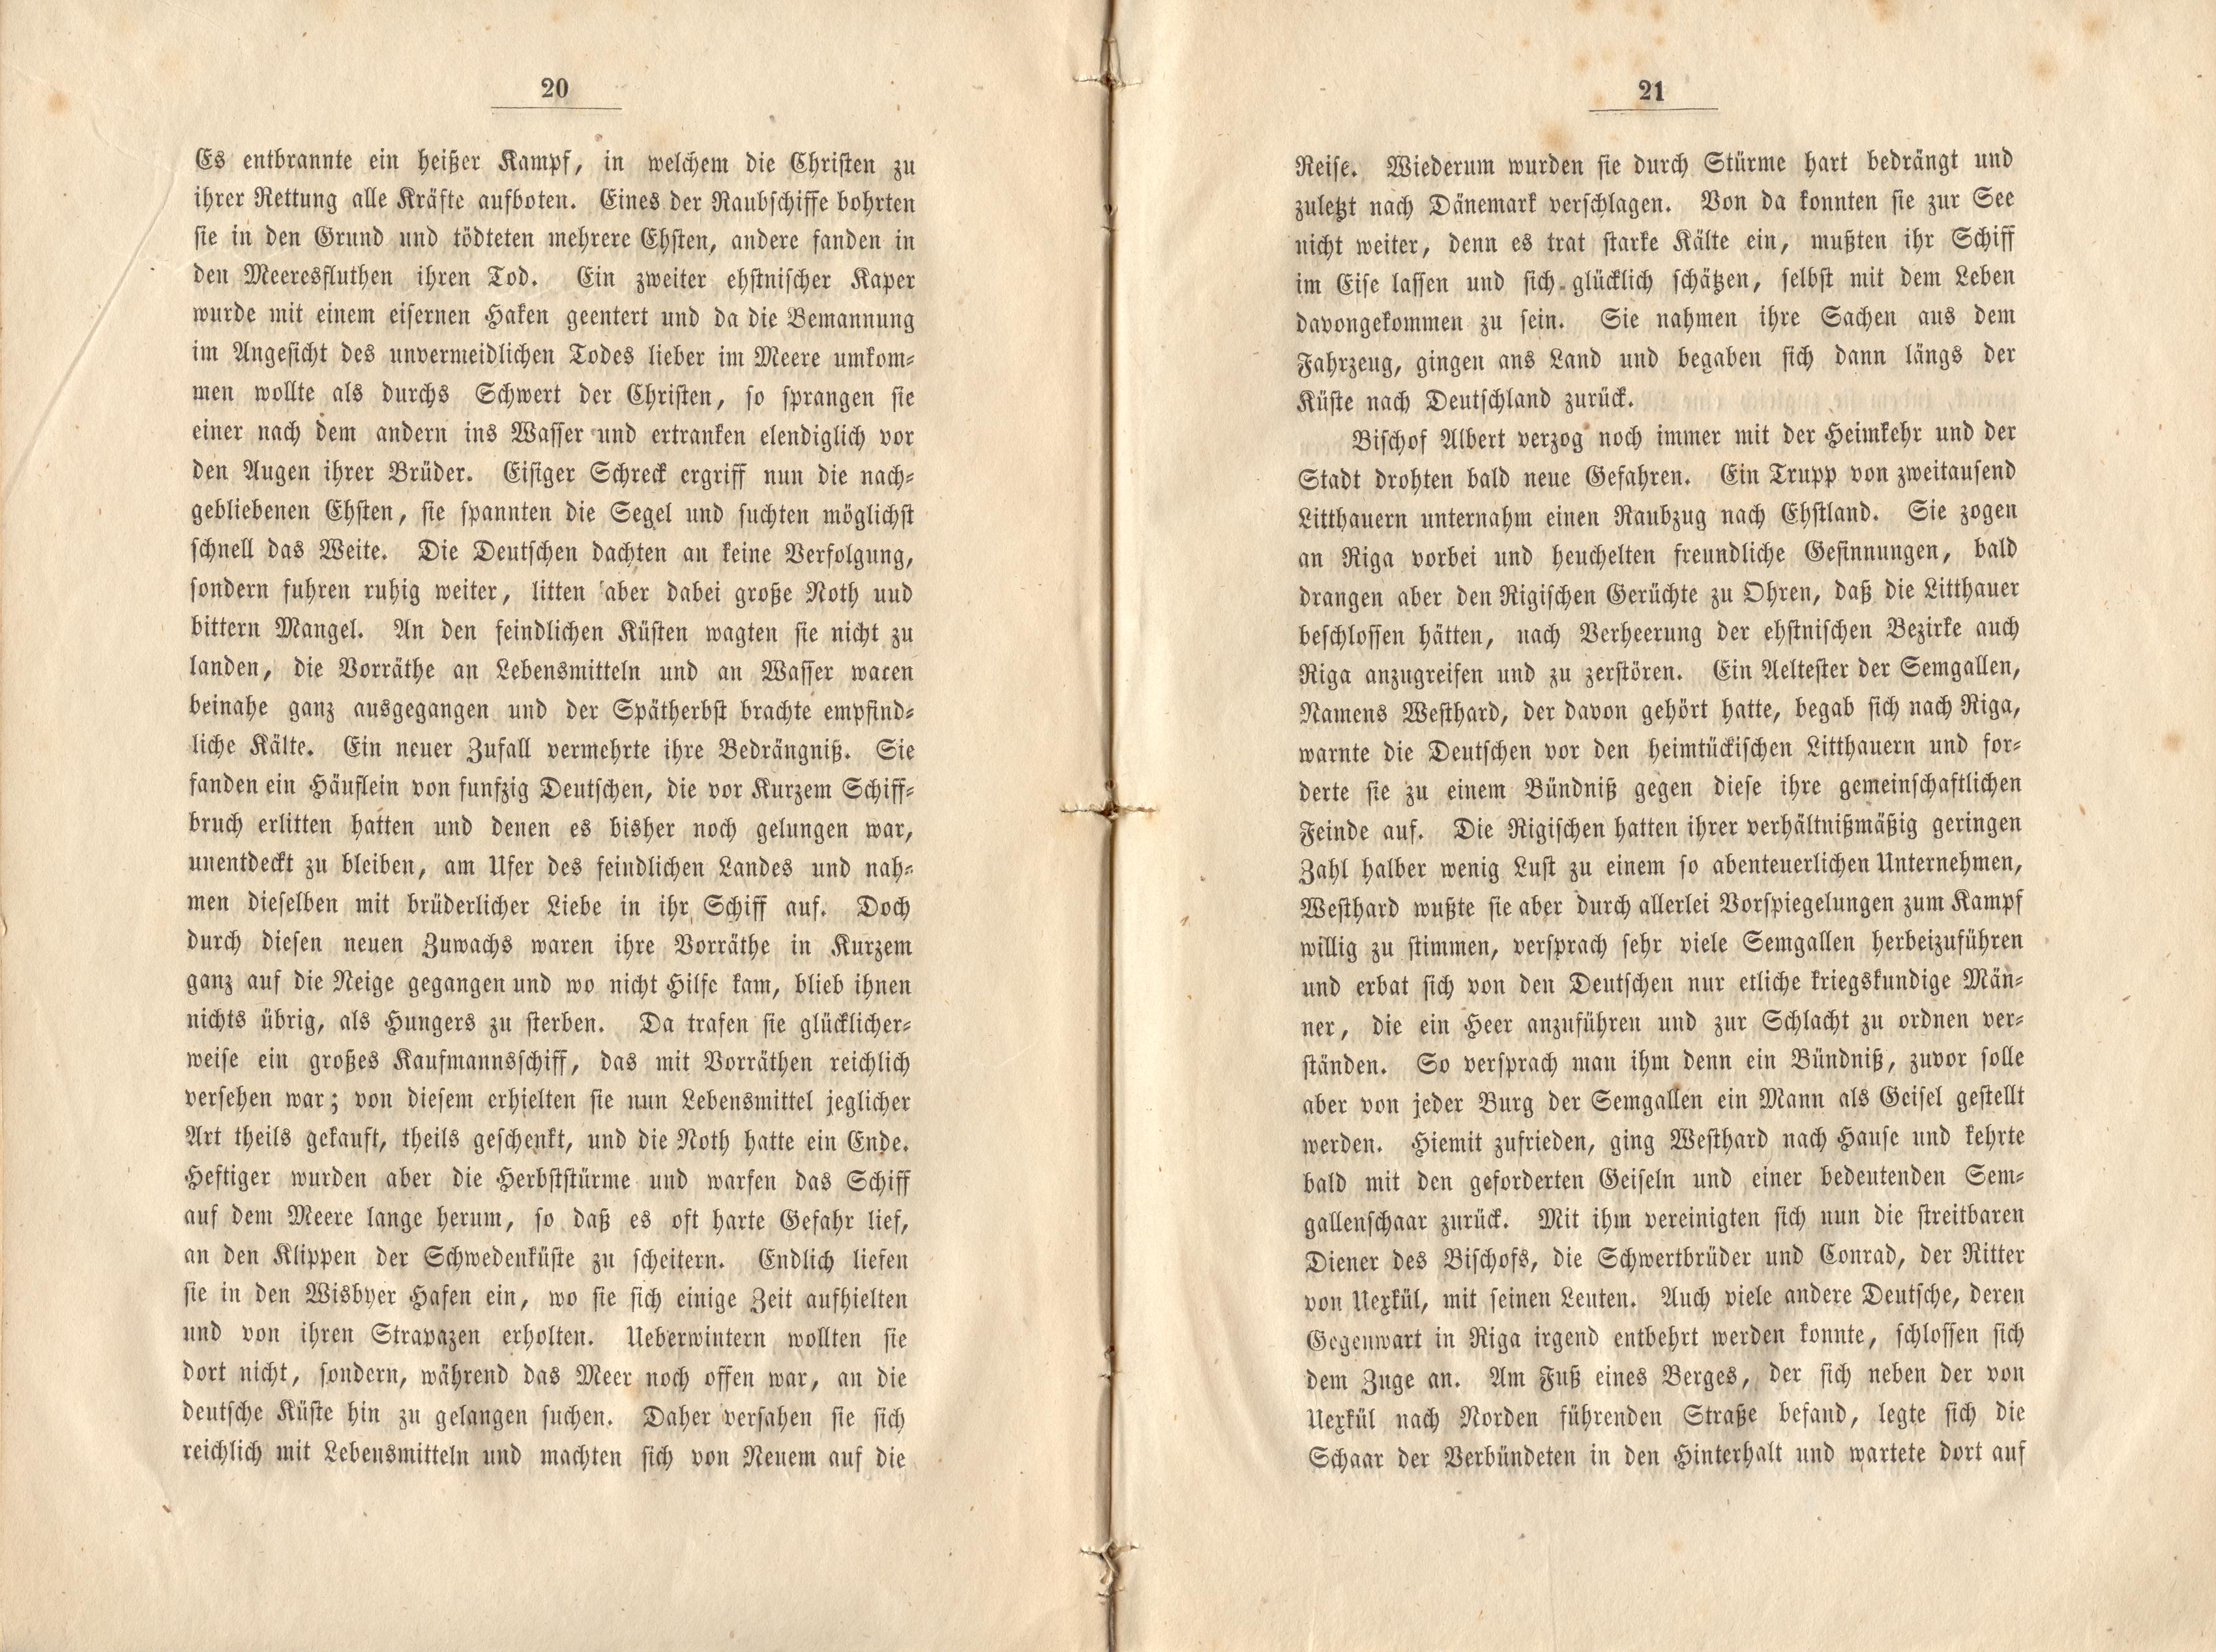 Felliner Blätter (1859) | 11. (20-21) Основной текст